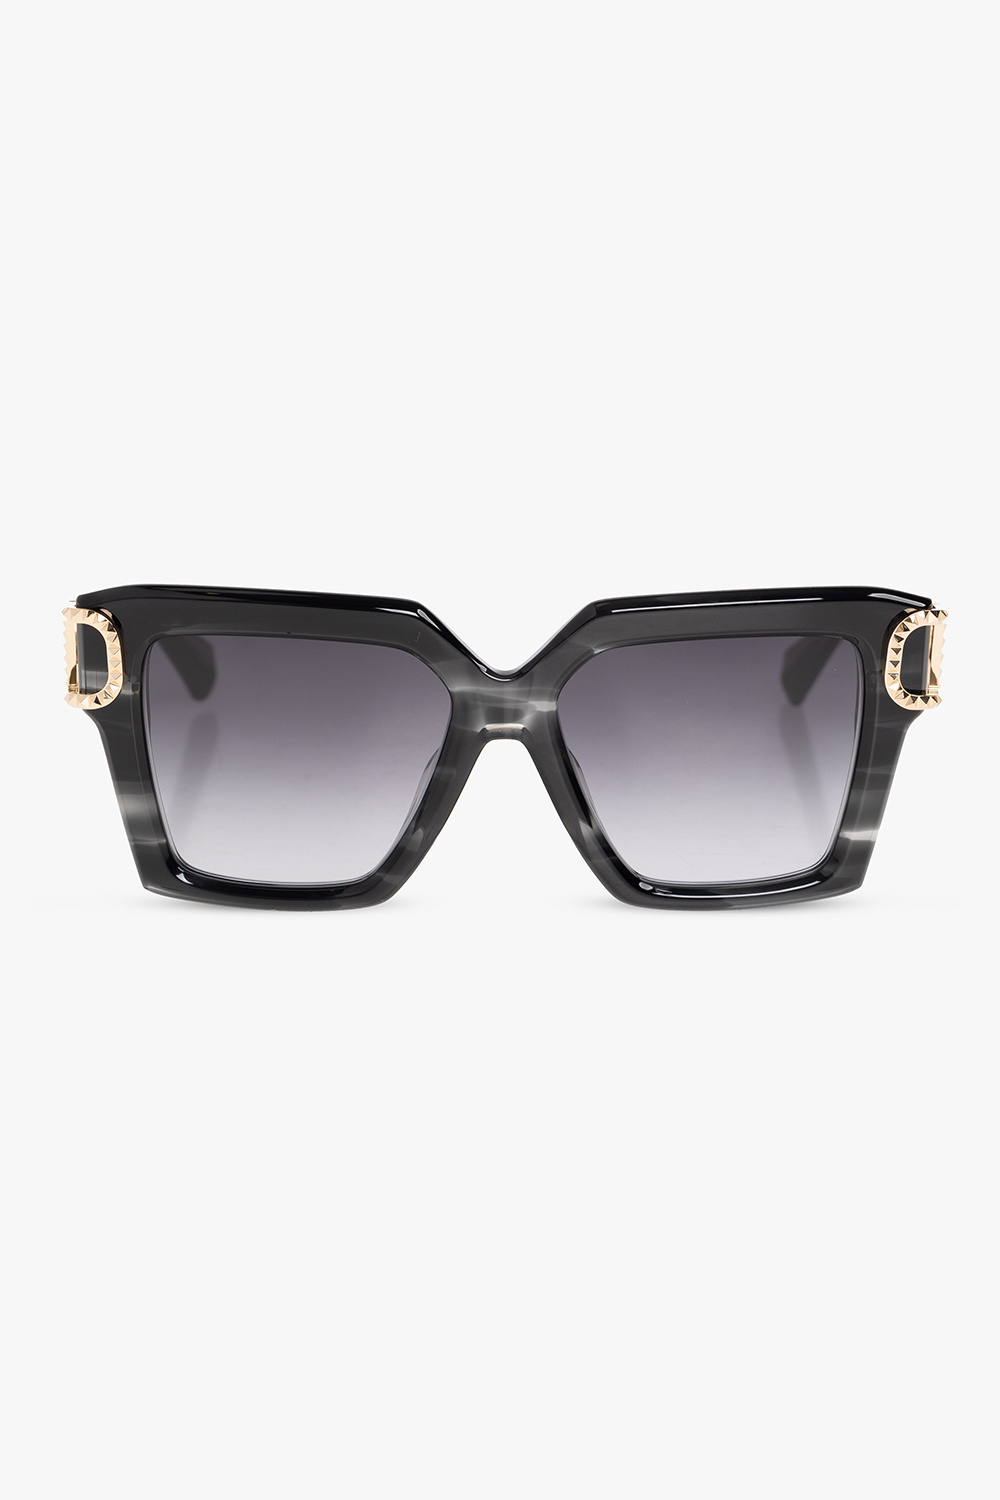 Valentino Eyewear tol eyewear trapezium cat eye sunglasses item